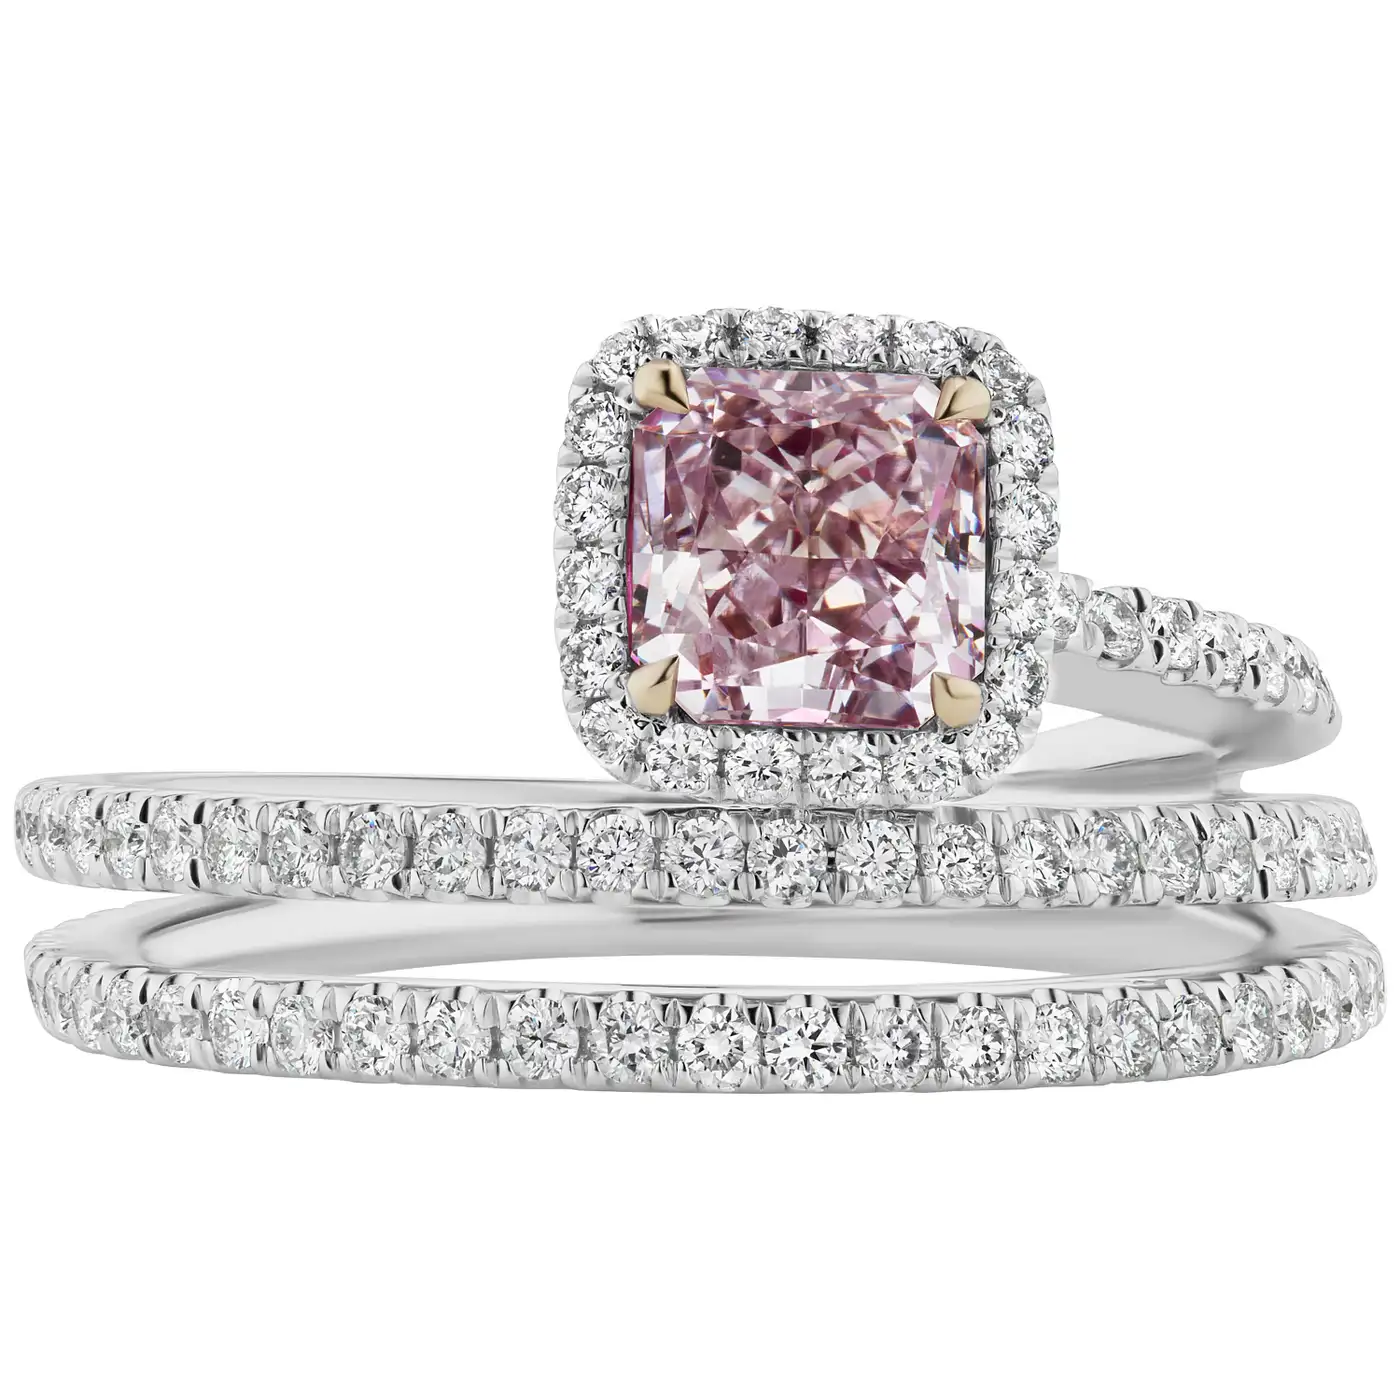 Scarselli-Fancy-Purple-Pink-1.00-carat-Radiant-Cut-Diamond-Engagement-Ring-1.webp